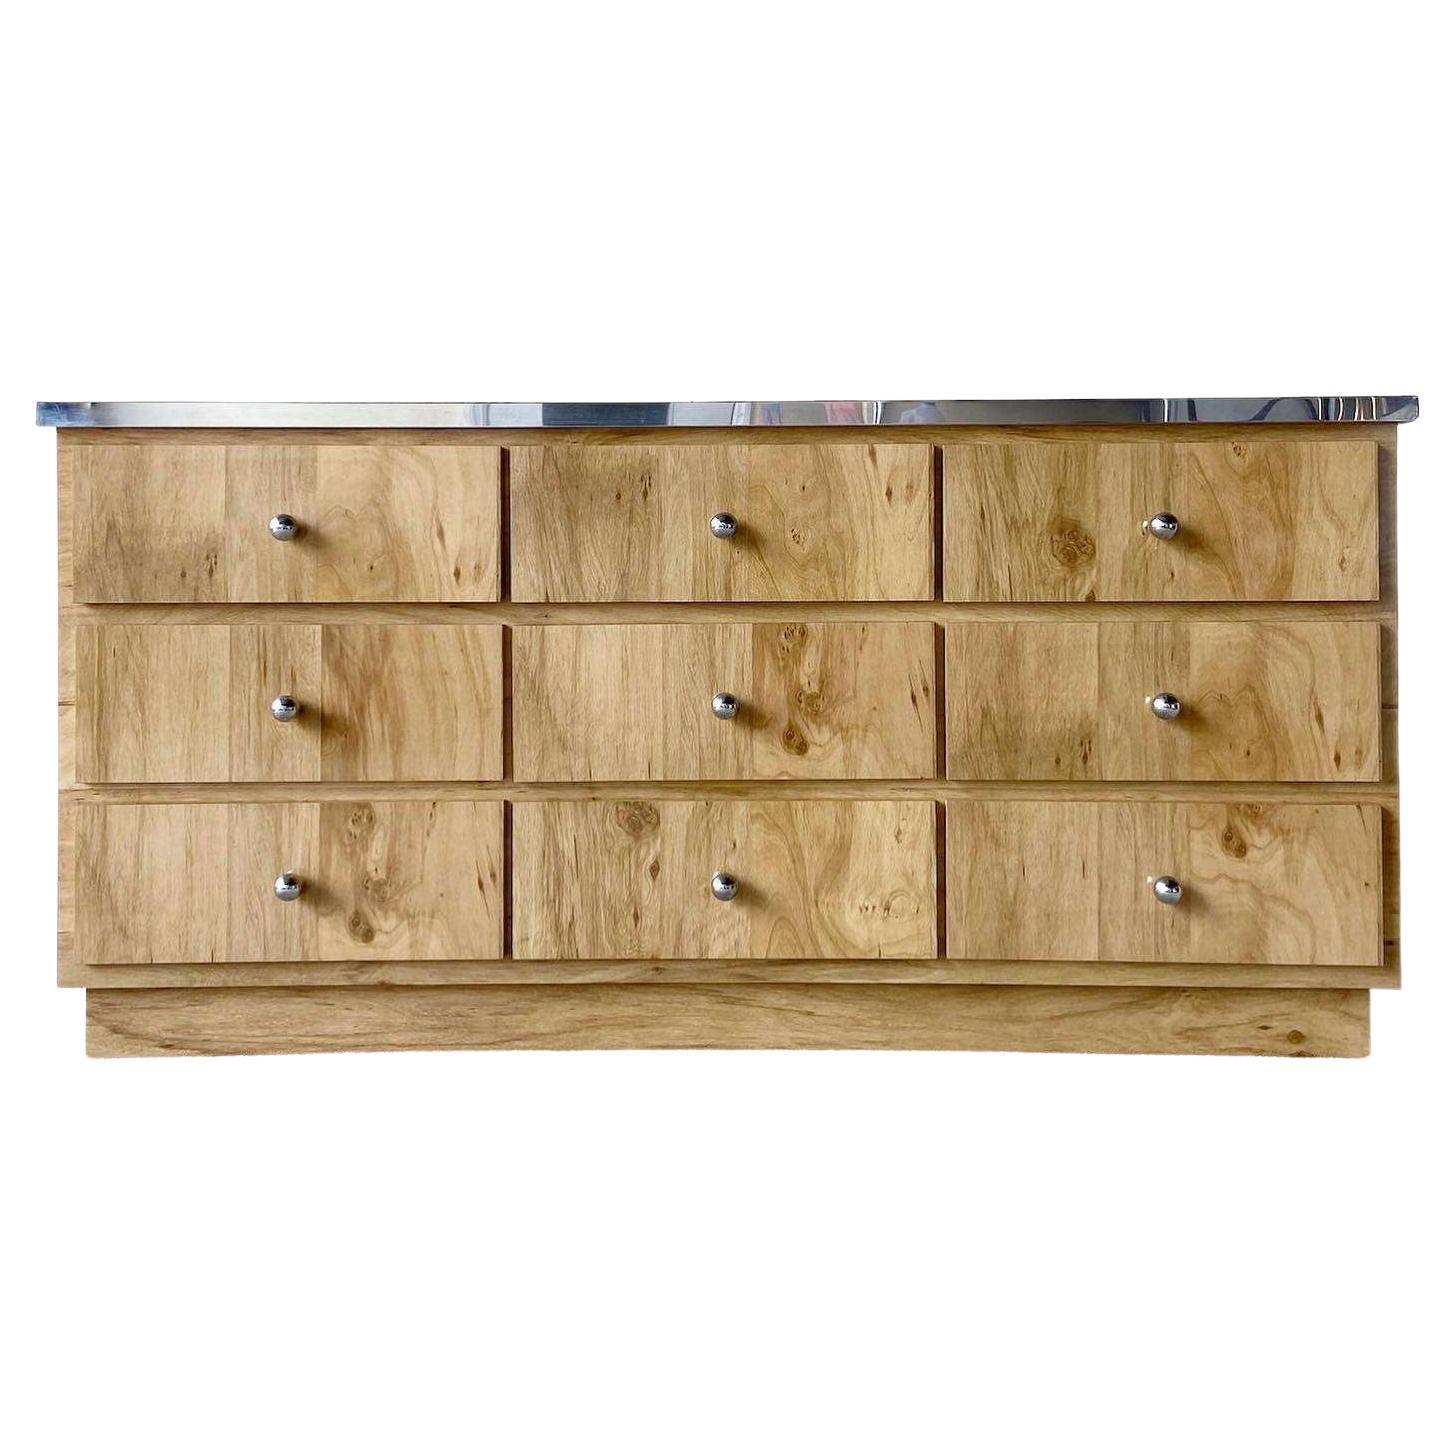 Postmodern Wood Grain Laminate and Chrome Dresser - 9 Drawers